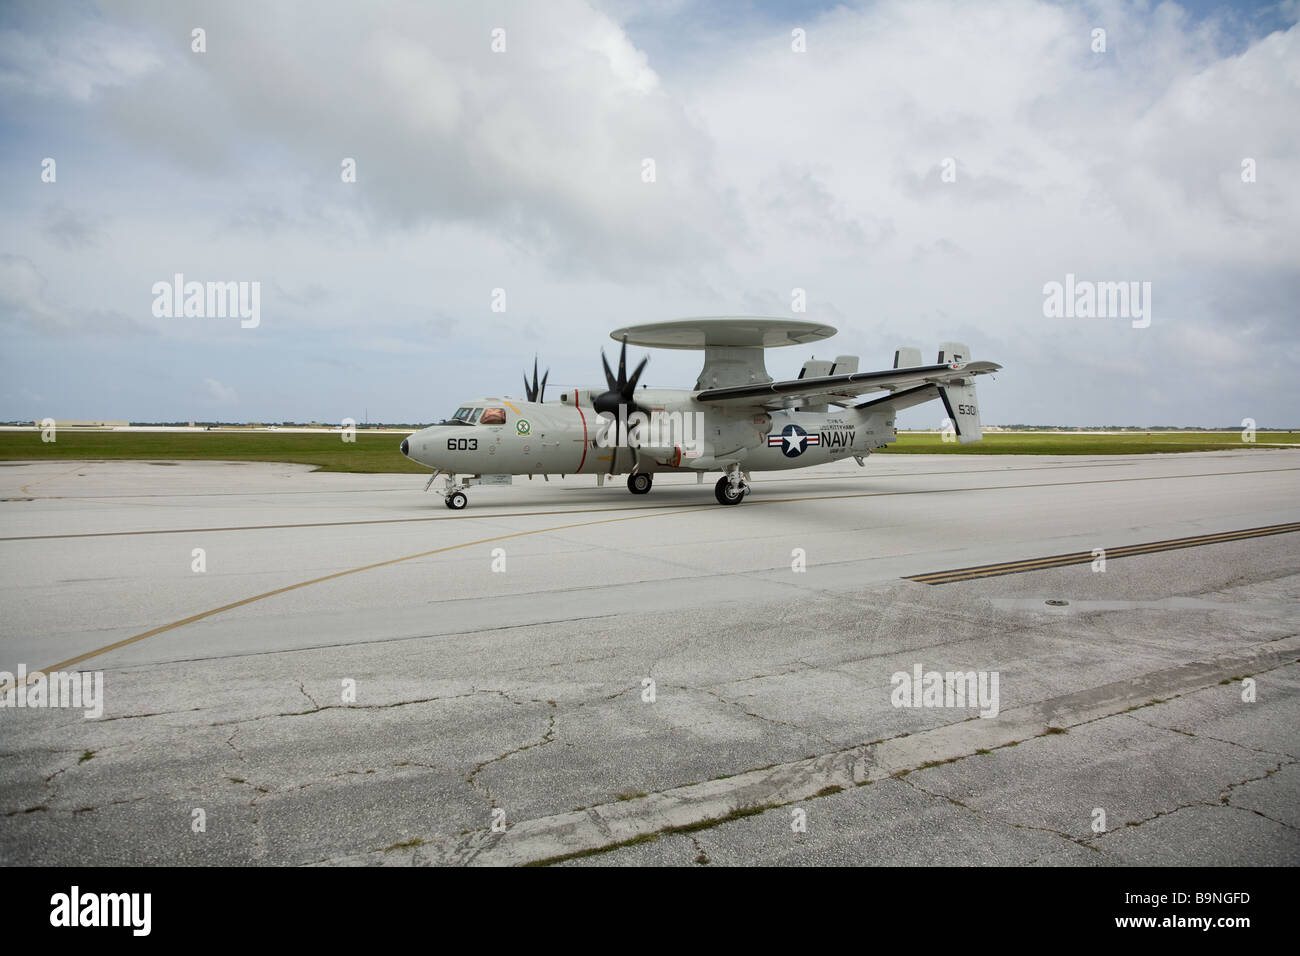 Ein U S Navy E-2C Hawkeye AWACS-Flugzeuge auf dem Boden in Guam Stockfoto